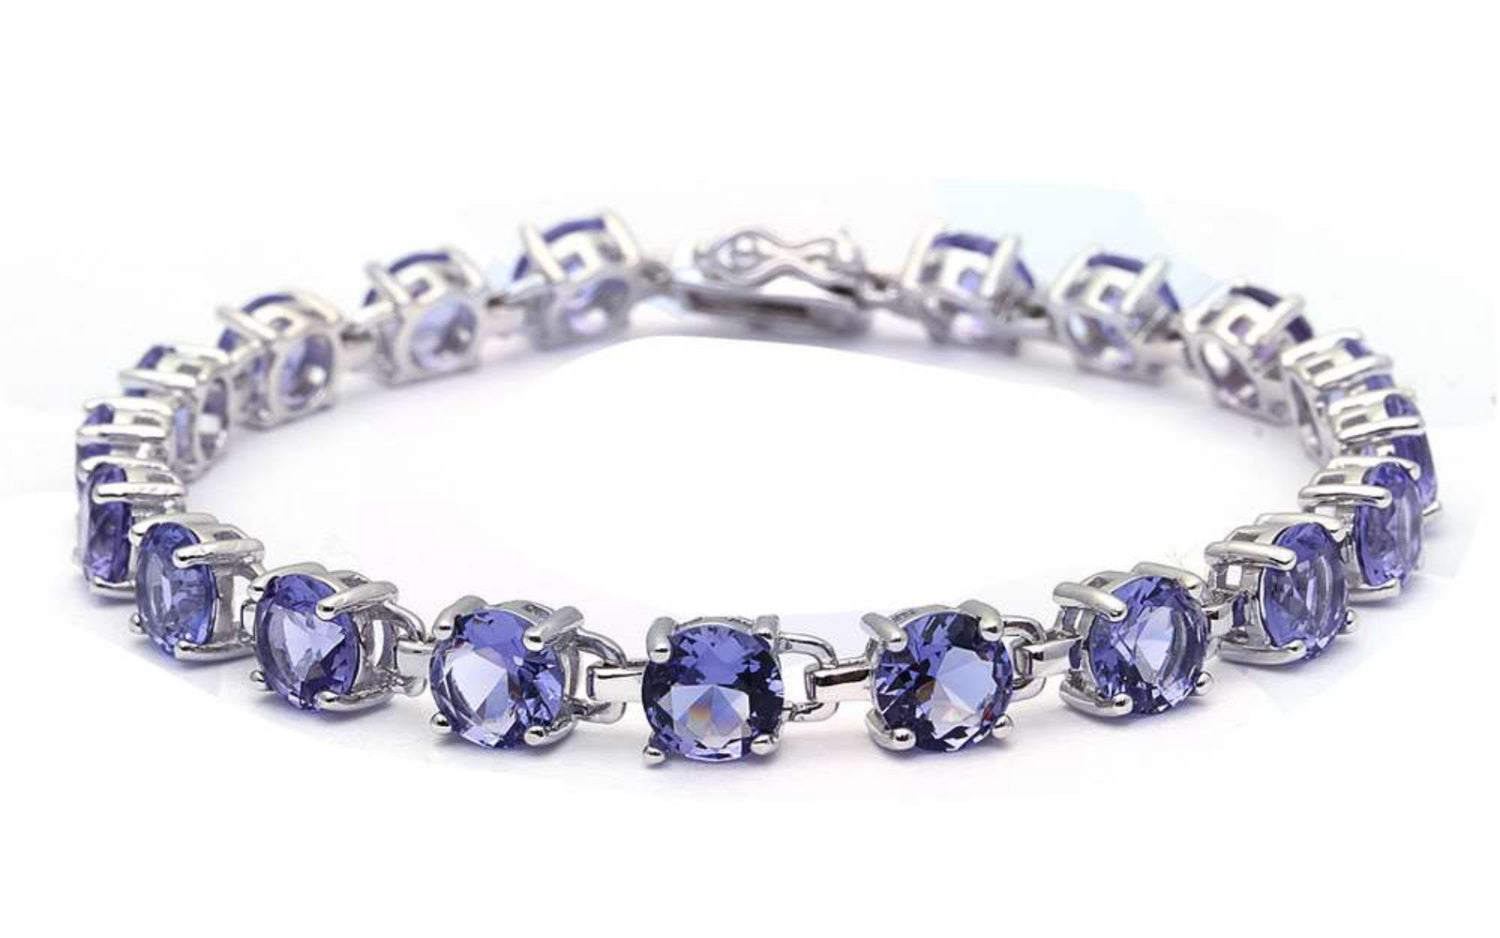 Elegant Tennis Bracelet 16.5 Carat Round Cut Tanzanite Solid 925 Sterling Silver Solitaire Wedding Engagement Tennis Bracelet Top Gift - Blue Apple Jewelry